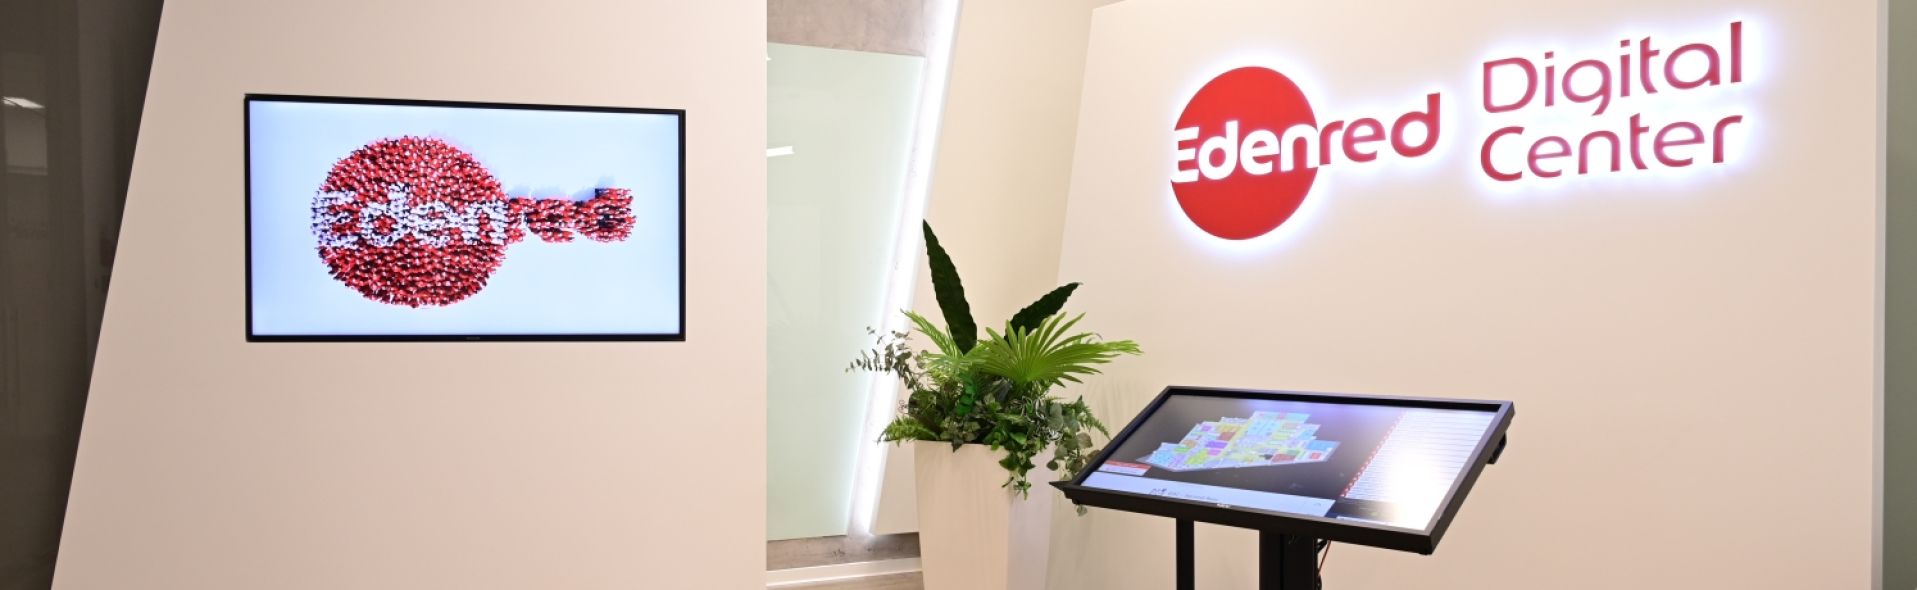 Edenred Digital Center, hub cheie în digitalizarea companiei